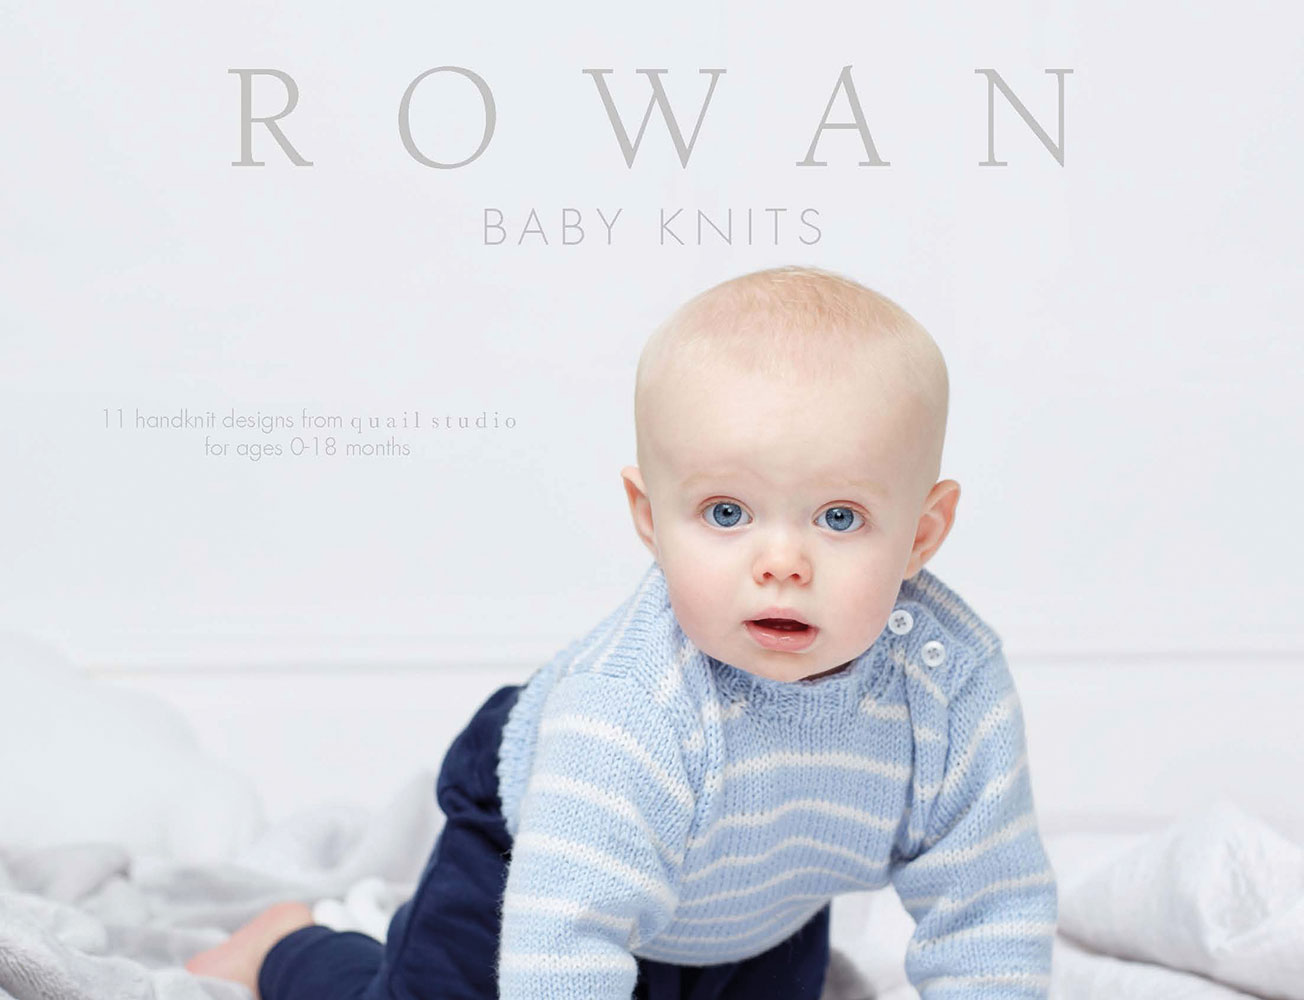 Modèles du catalogue Rowan Baby Knits